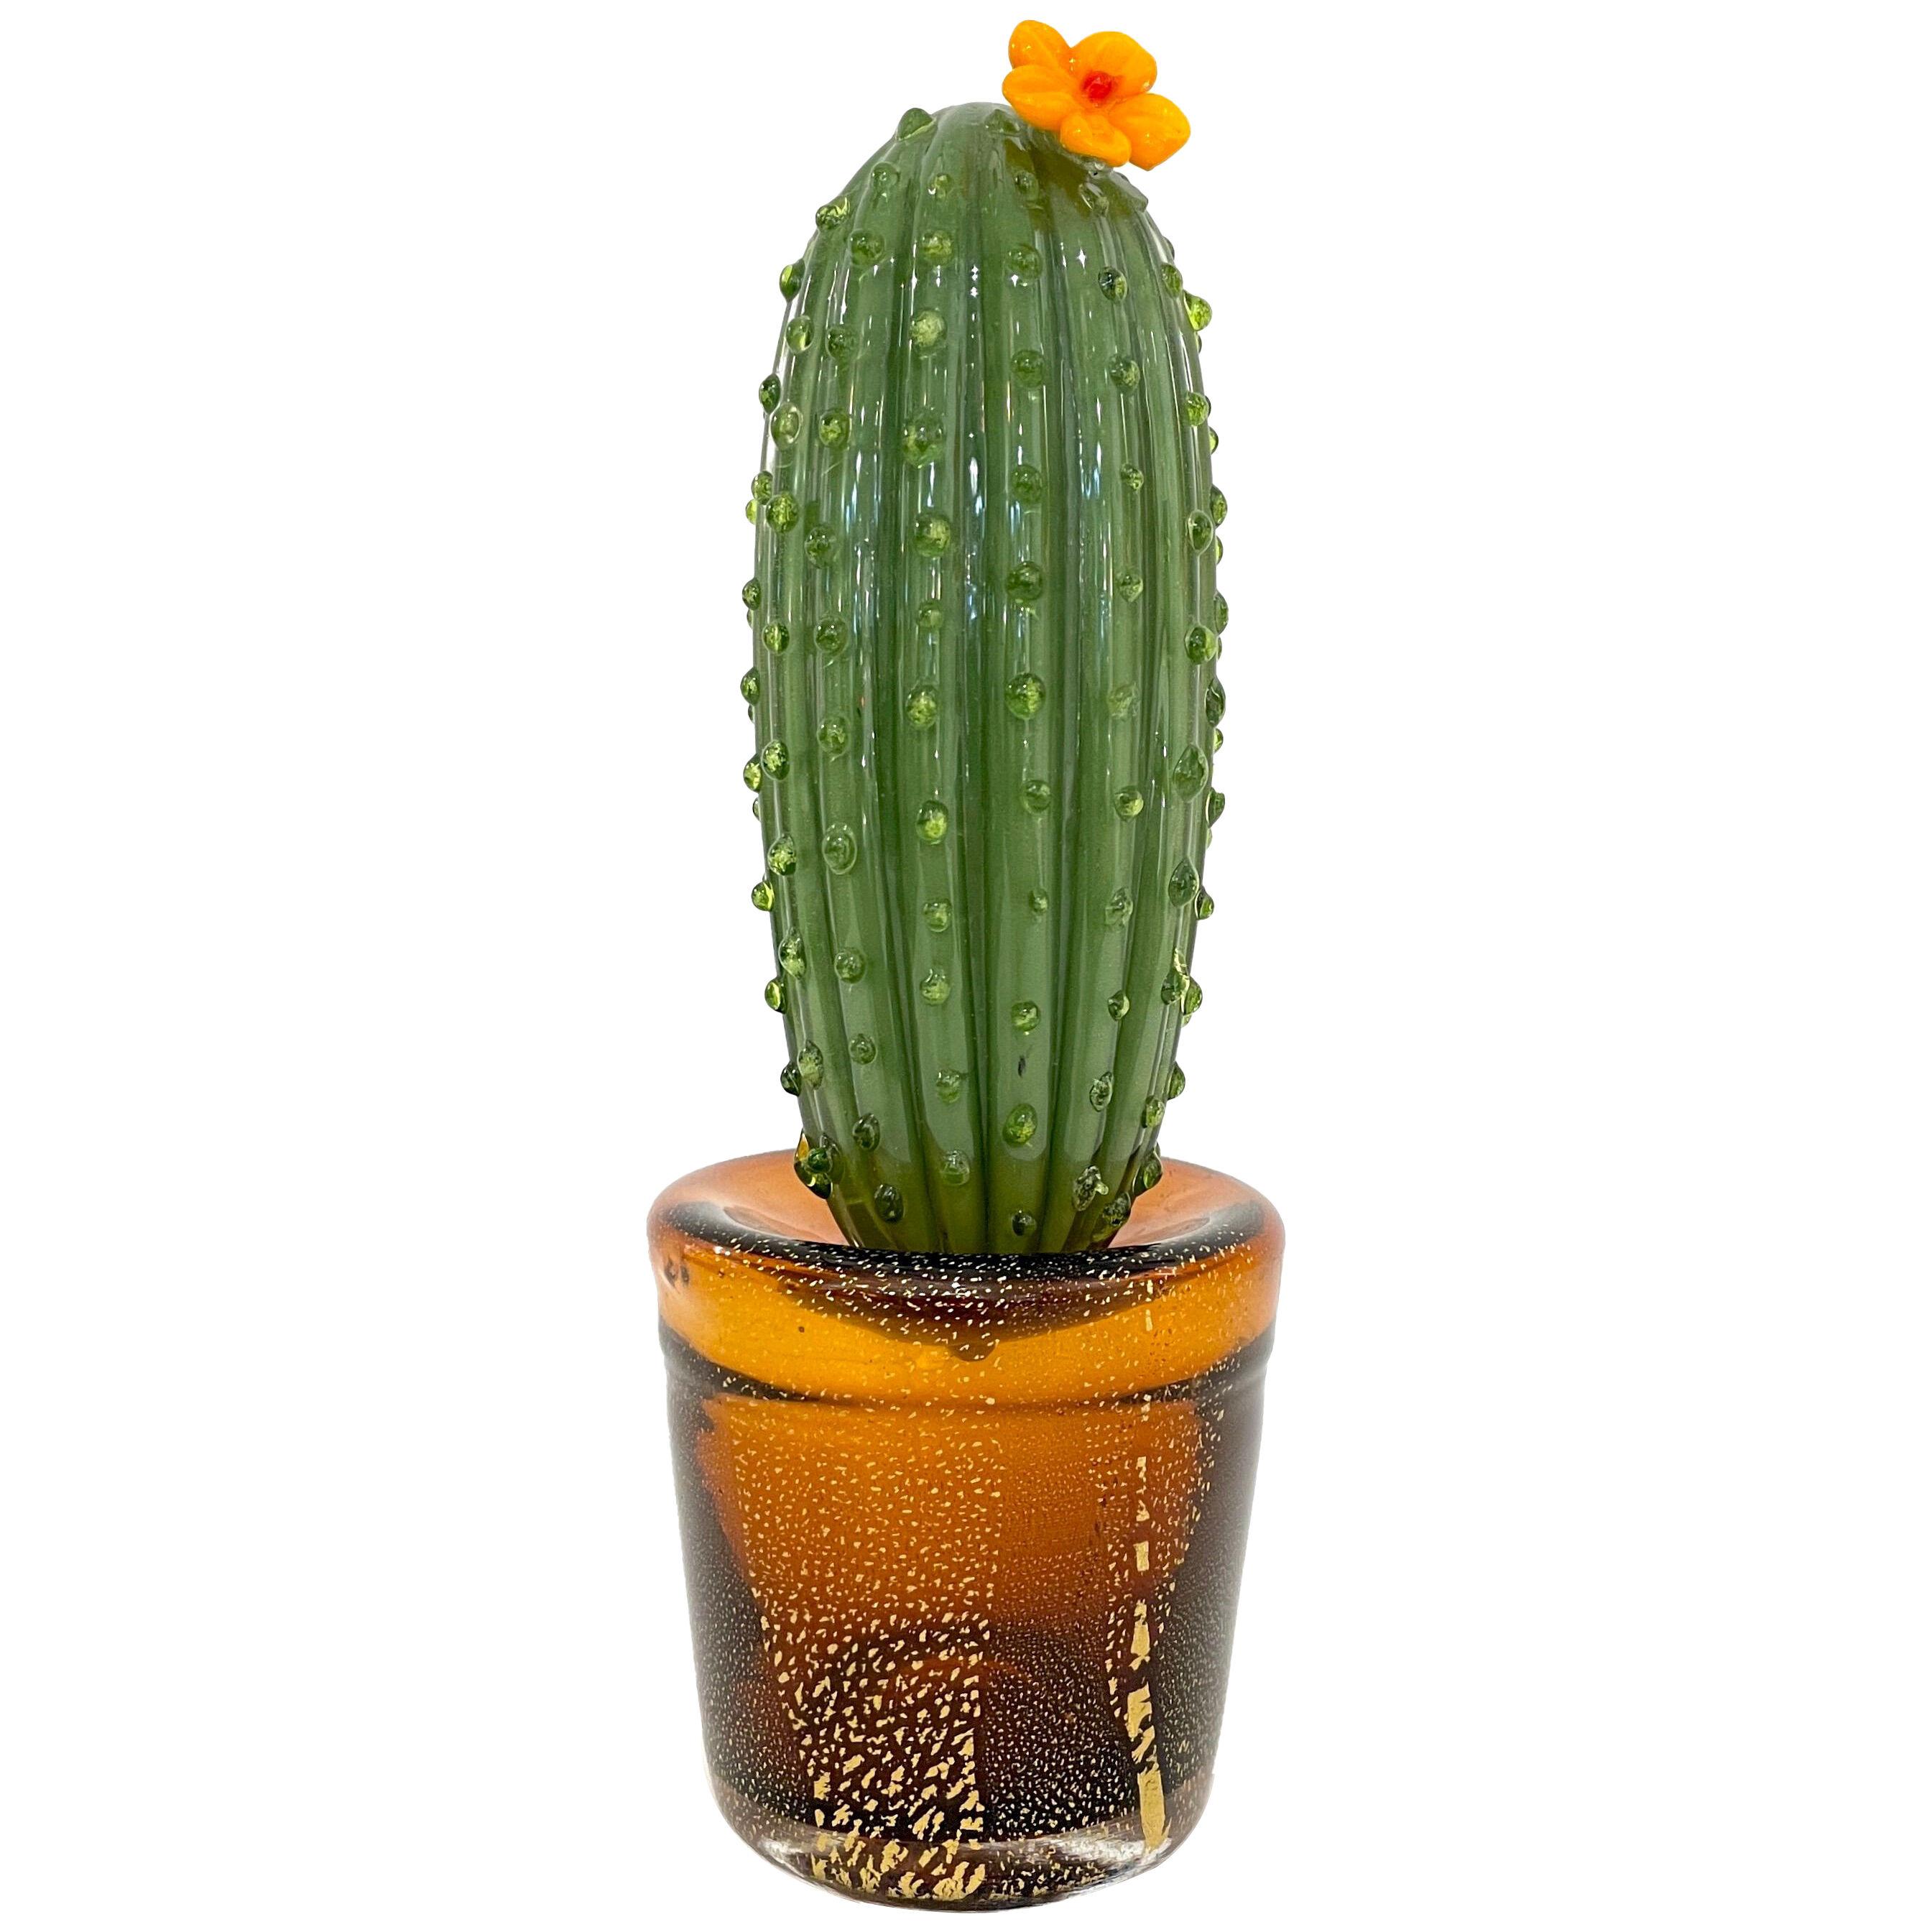 1990s Vintage Italian Green Murano Glass Tall Cactus Plant with Orange Flower